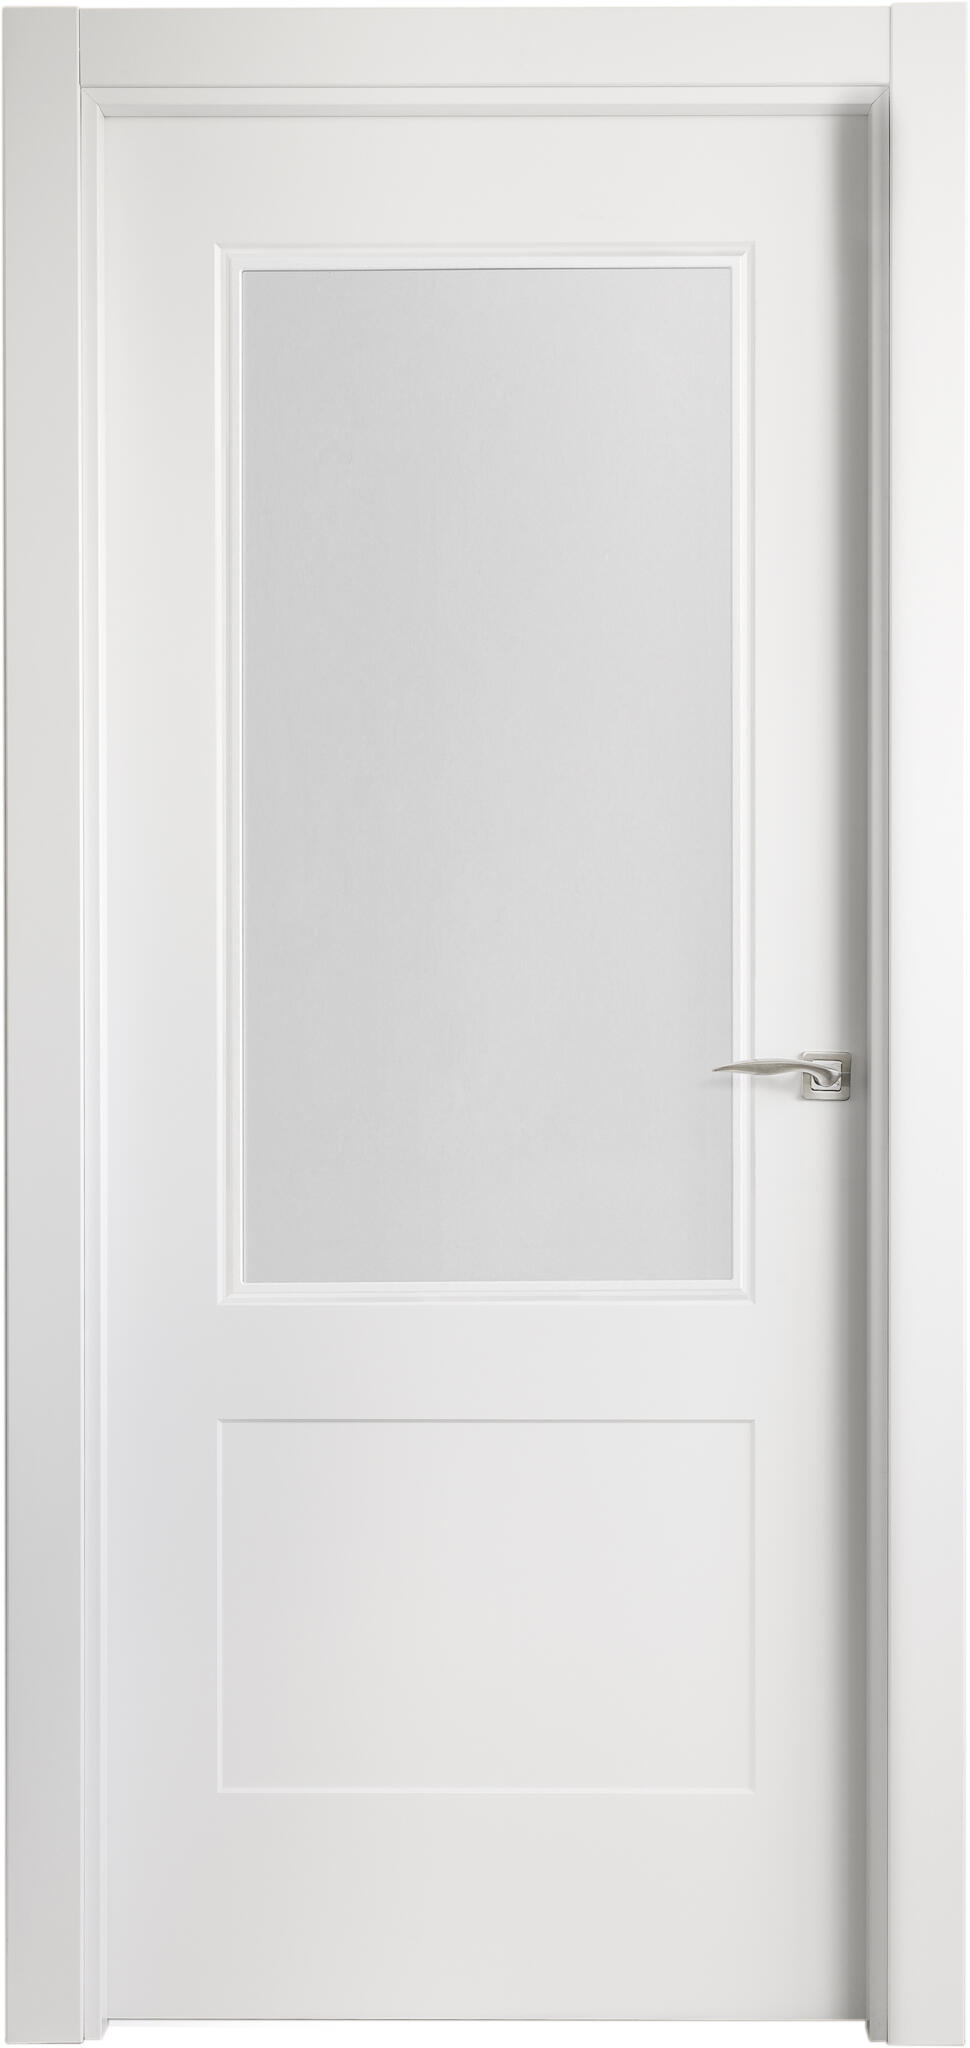 Puerta atlanta plus blanco apertura izquierda con cristal 11x82,5cm